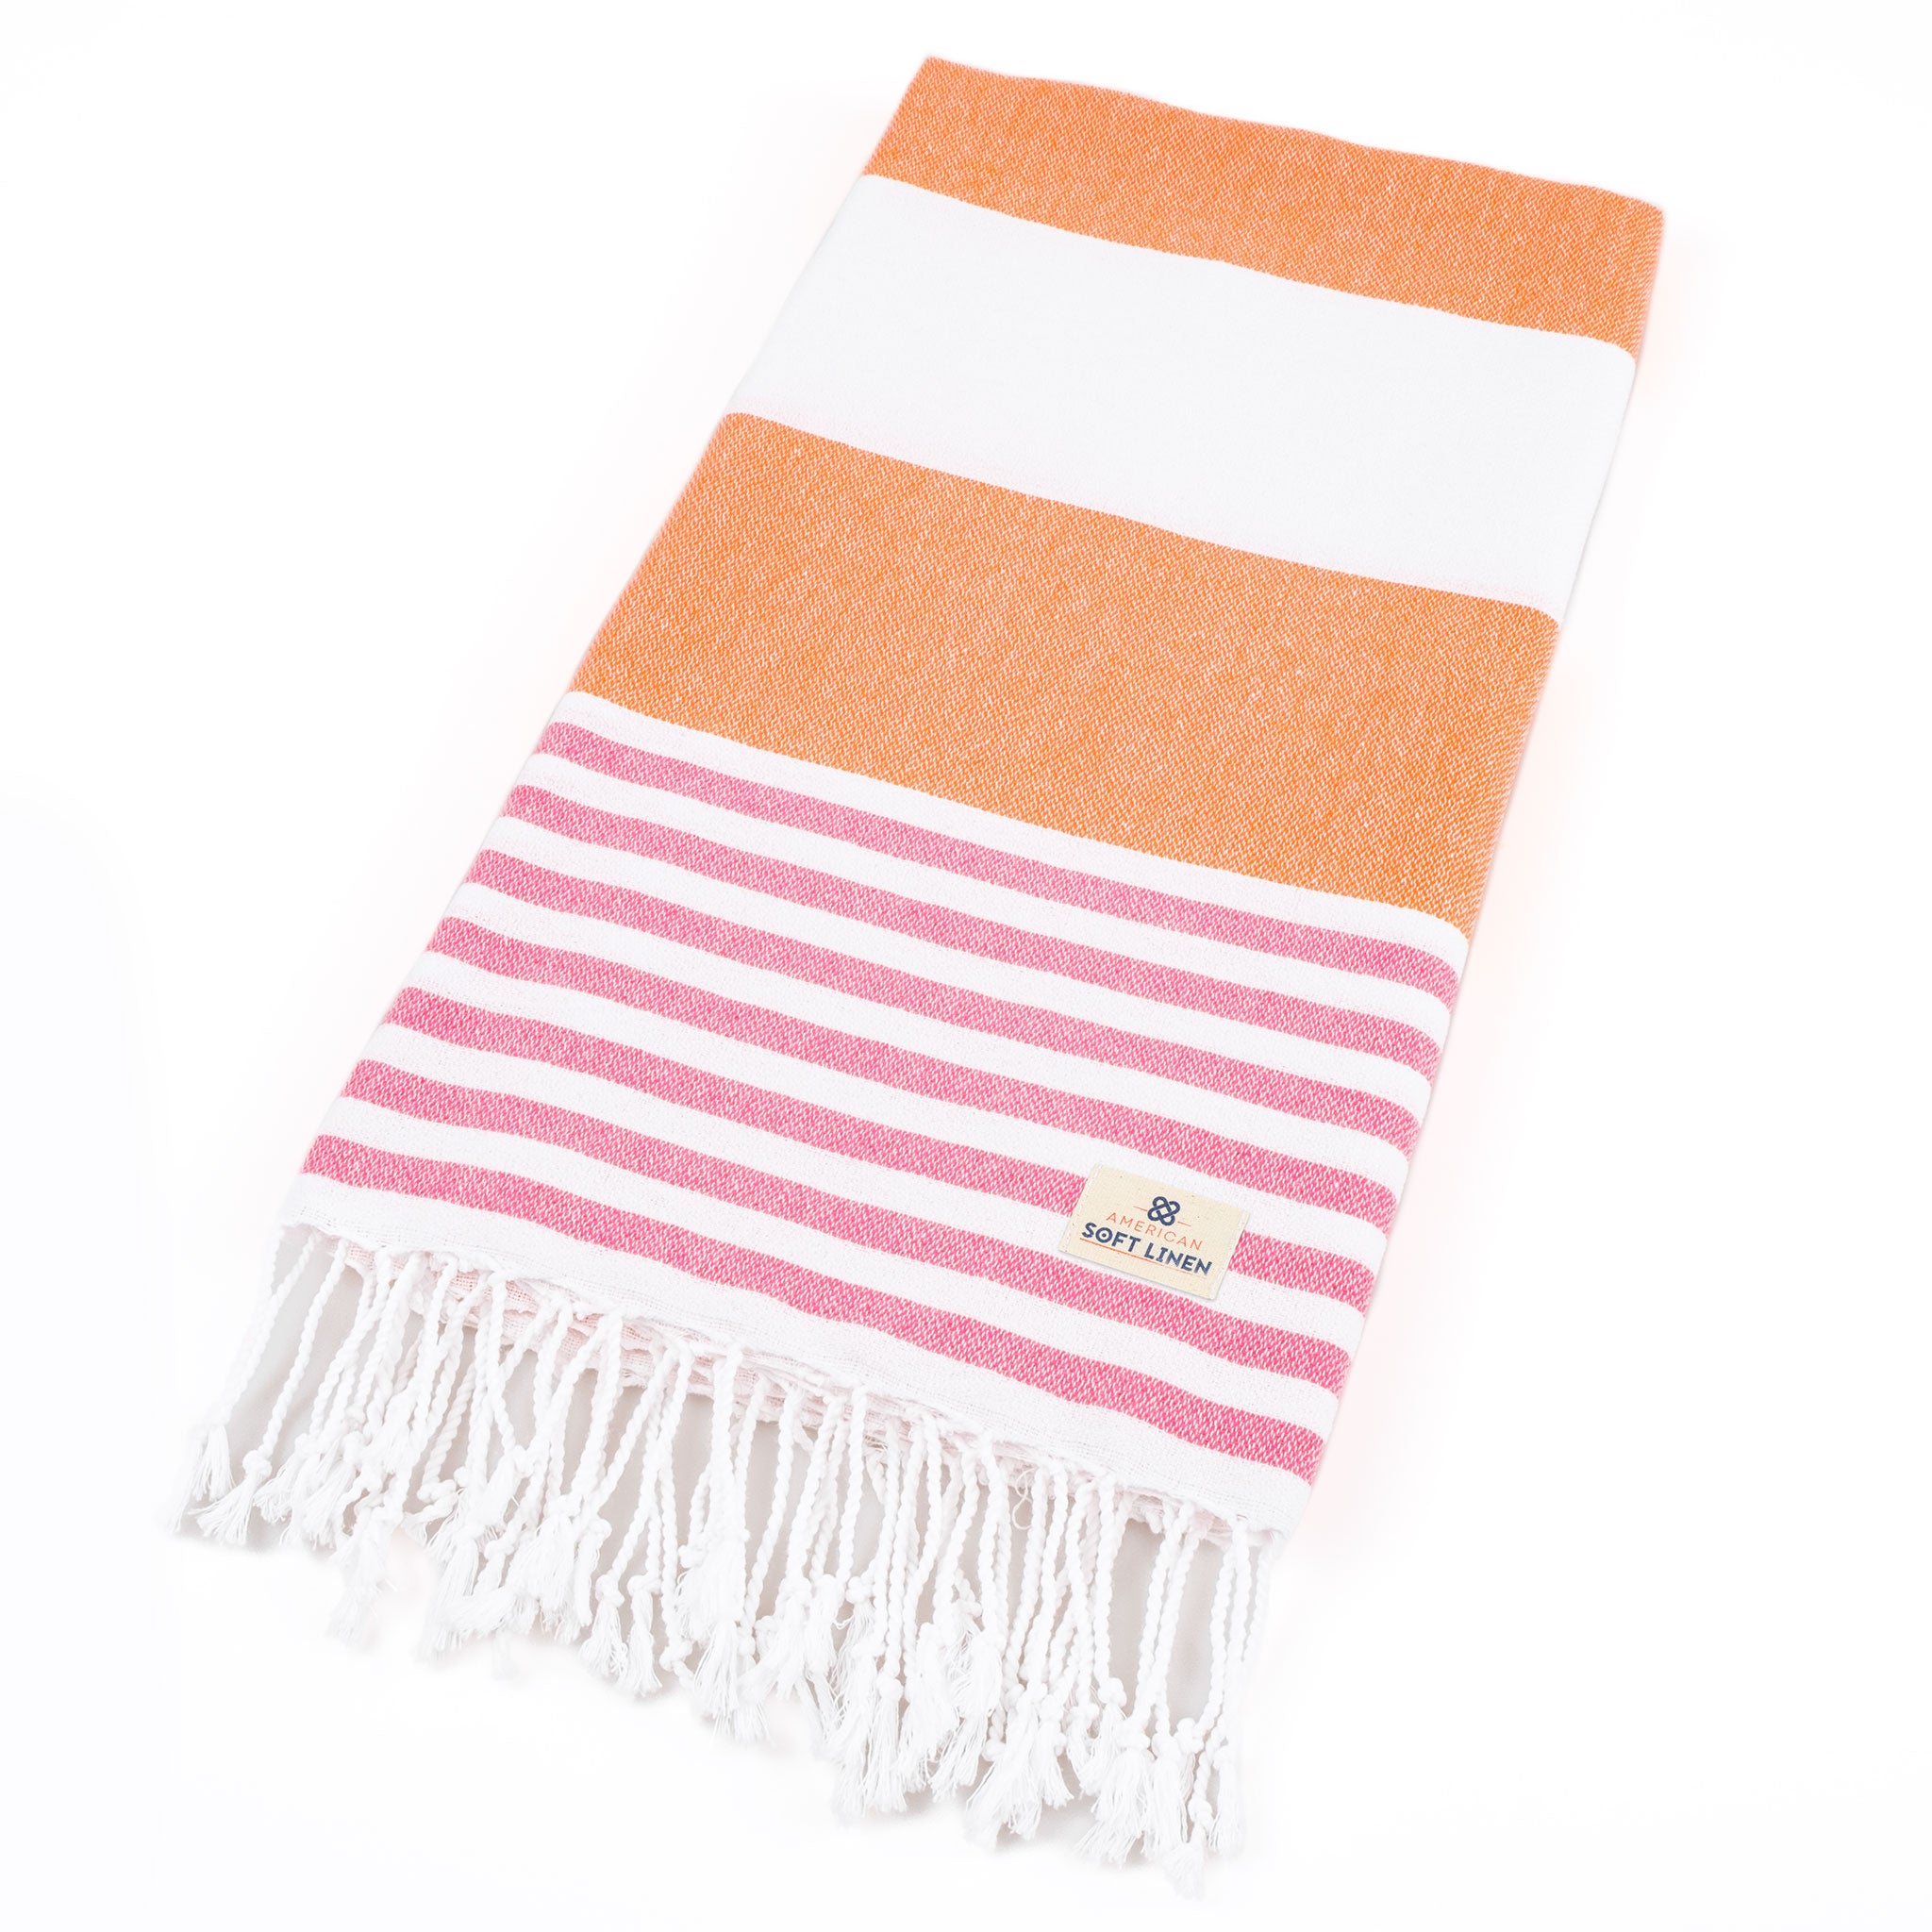 American Soft Linen - 100% Cotton Turkish Peshtemal Towels 40x70 Inches - Pink - 5